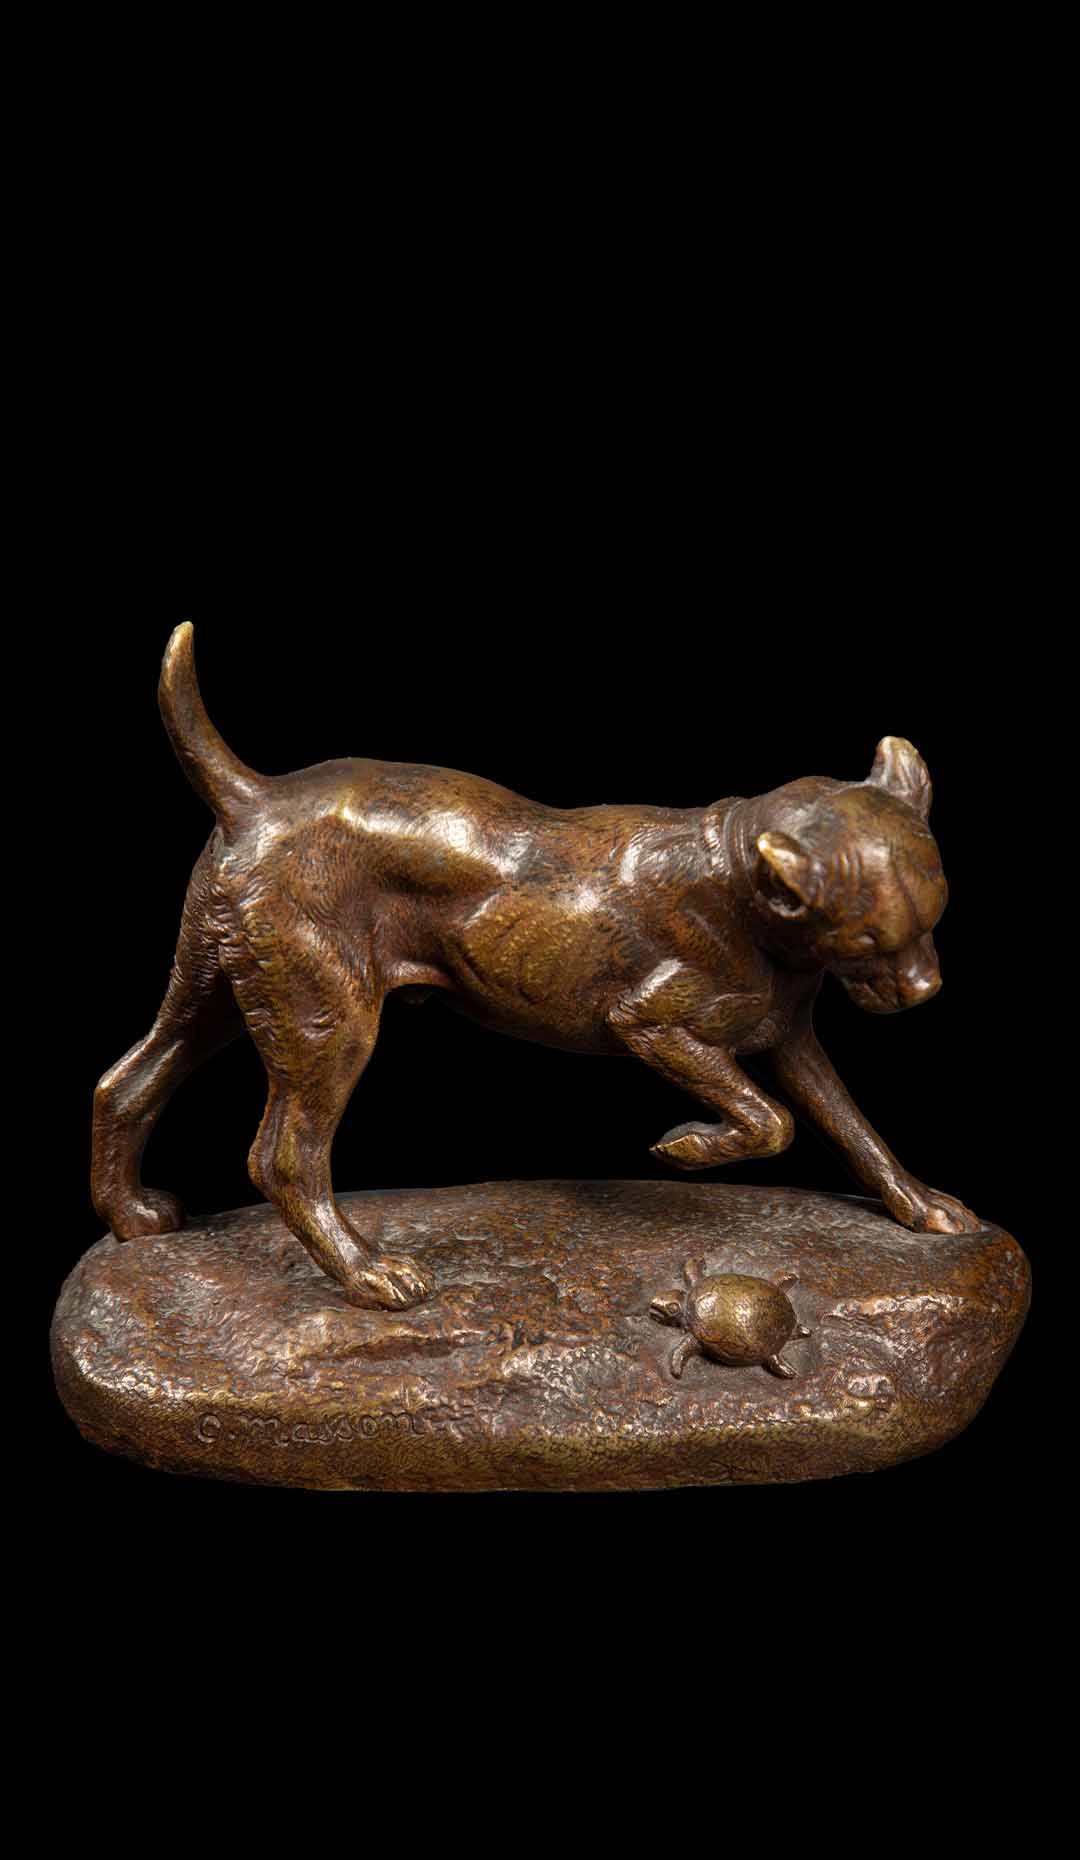 Late 19th Century Bronze Sculpture: Dog and Turtle Play by Clovis Edmond Masson